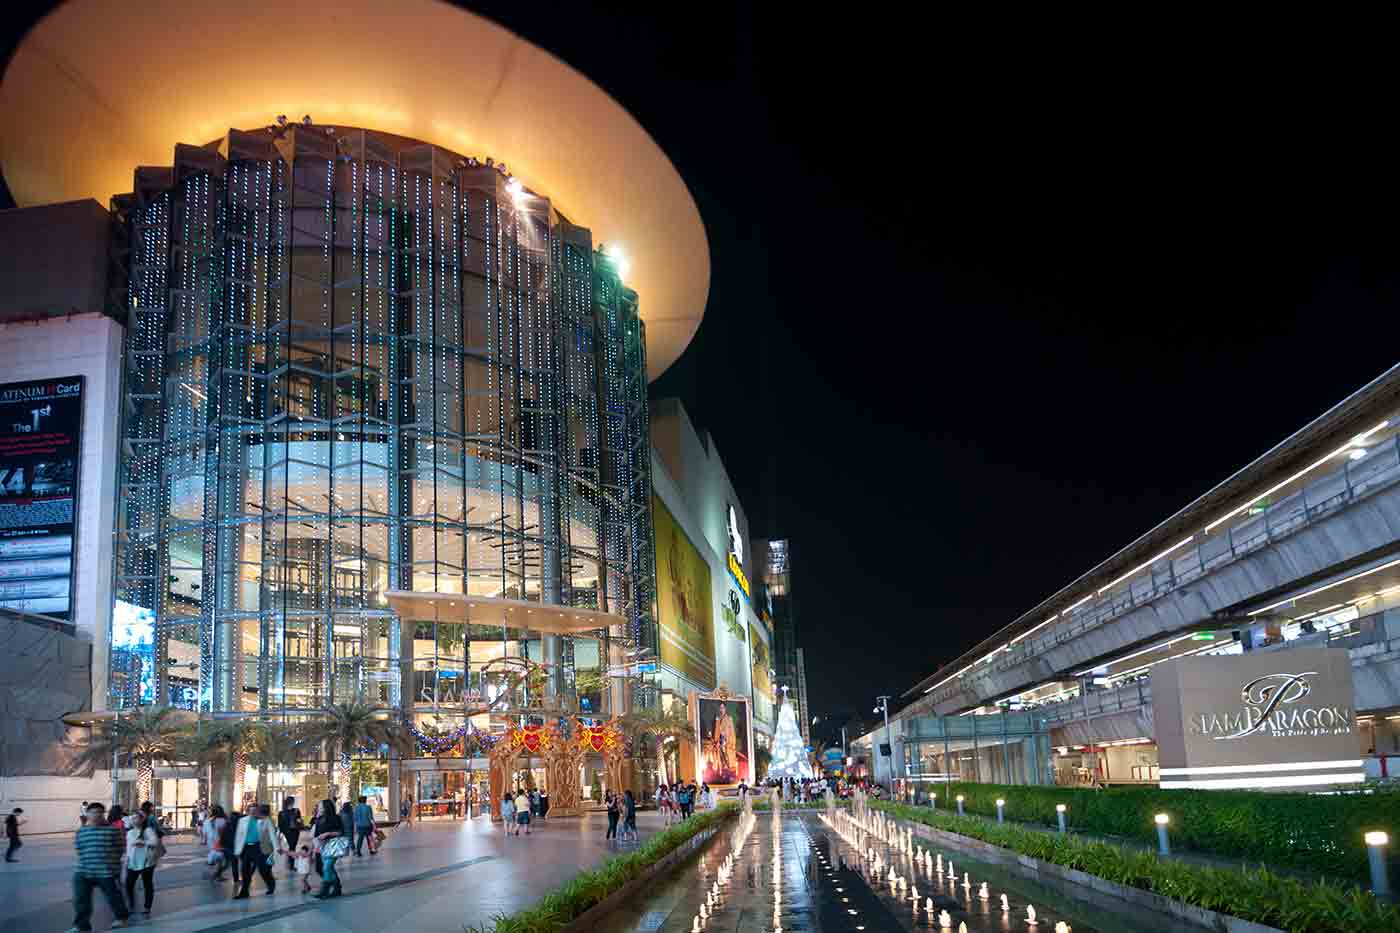 Siam Paragon Mall